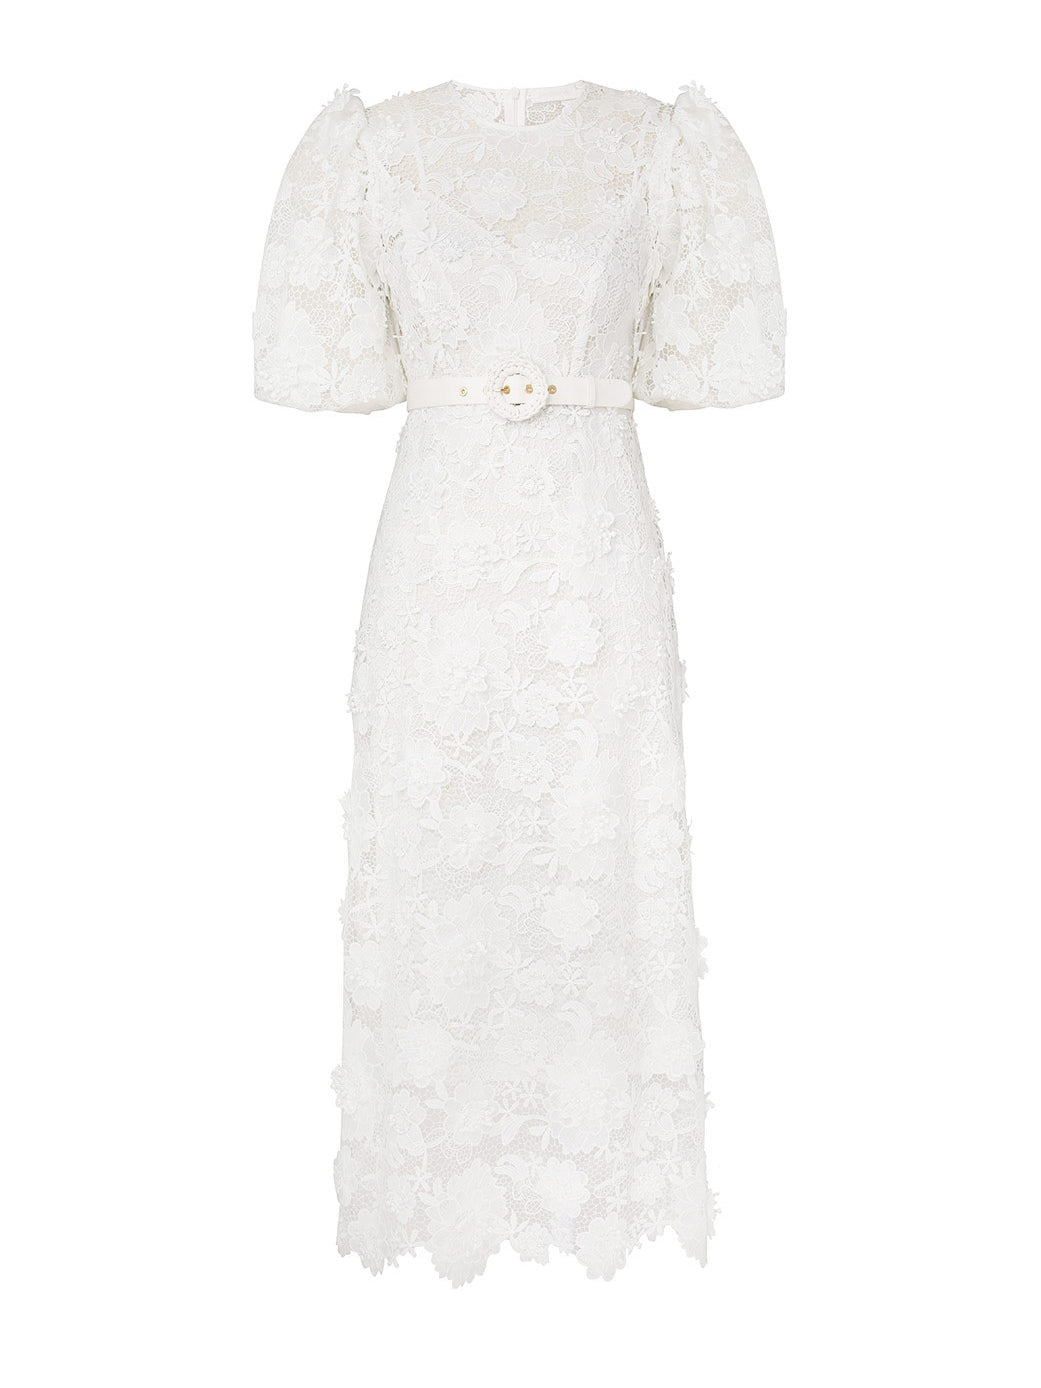 Halliday Lace Flower Dress, Ivory